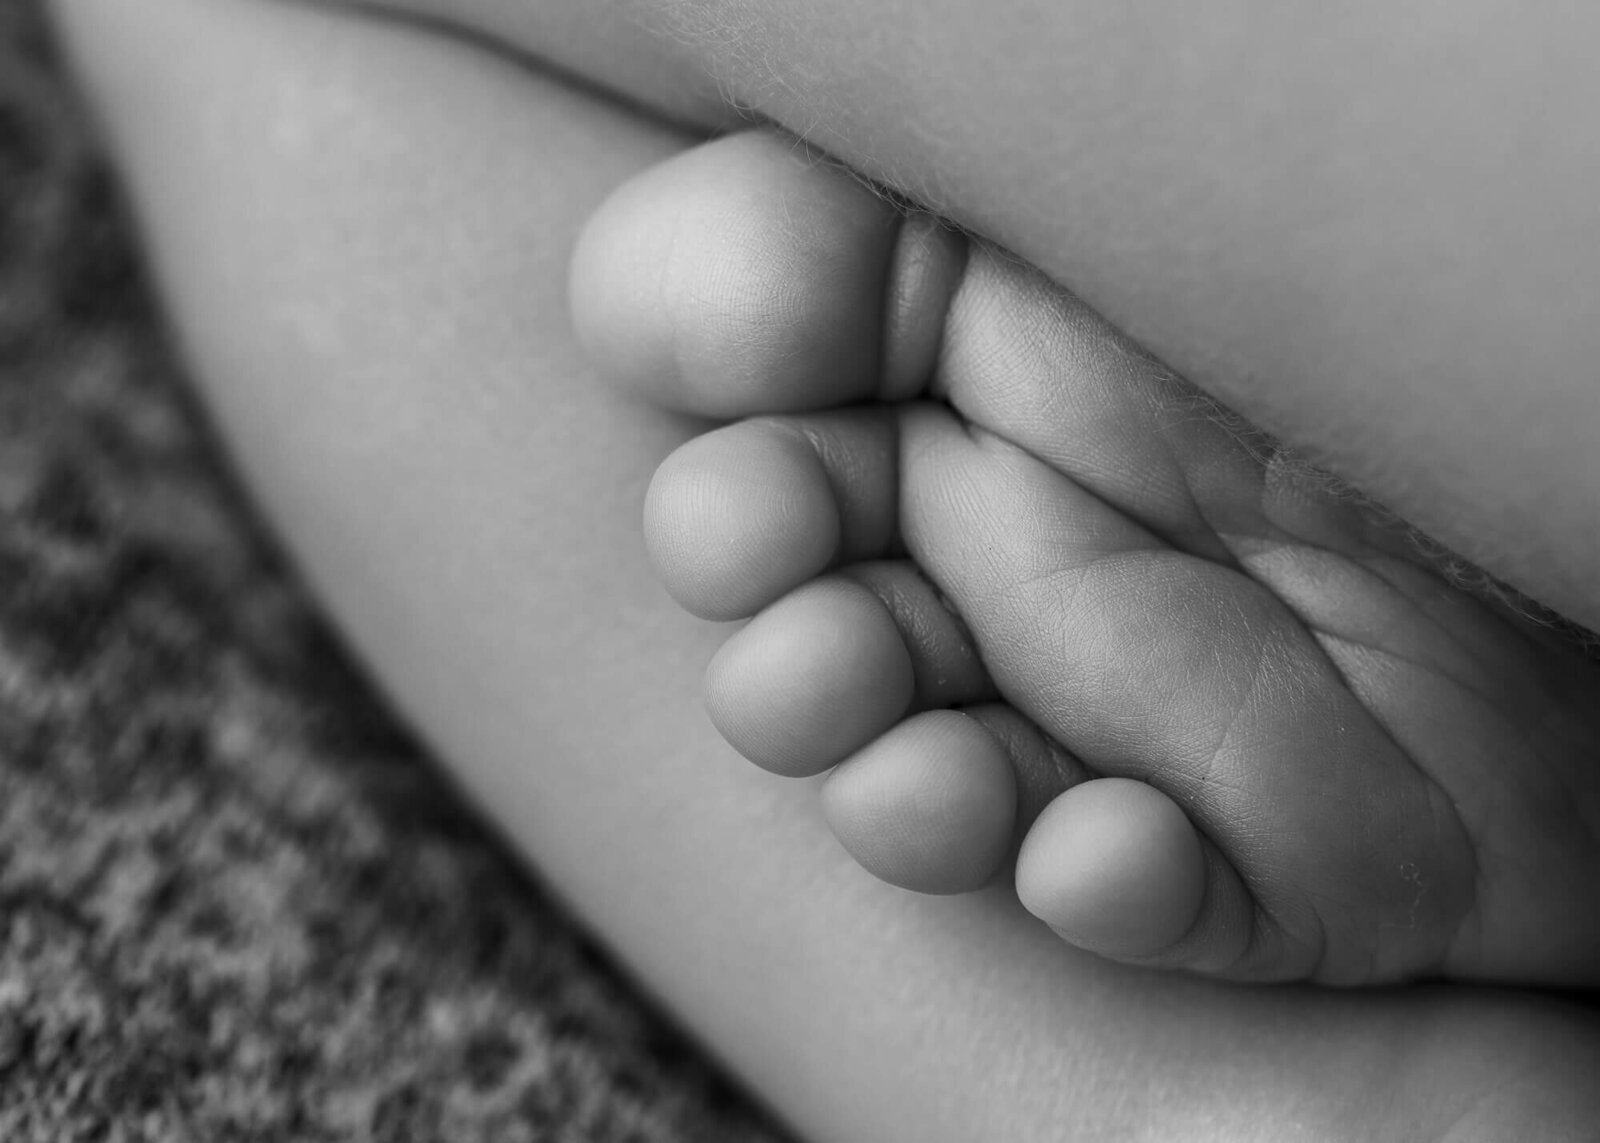 Macro image of baby toes peeking out